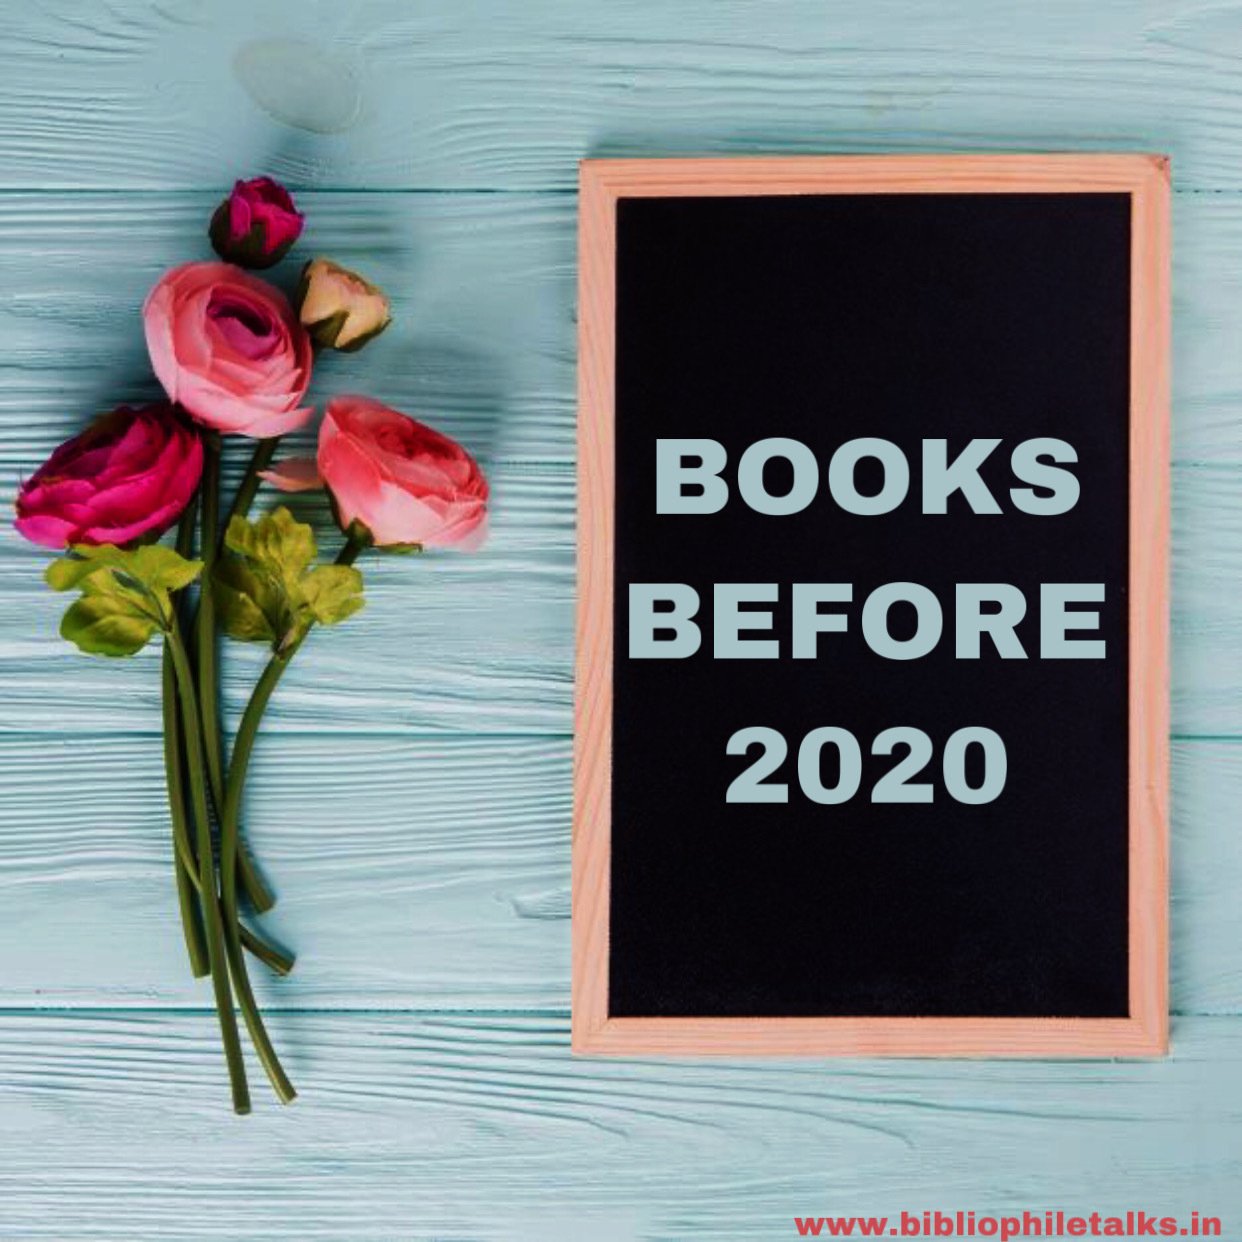 BOOKS BEFORE 2020